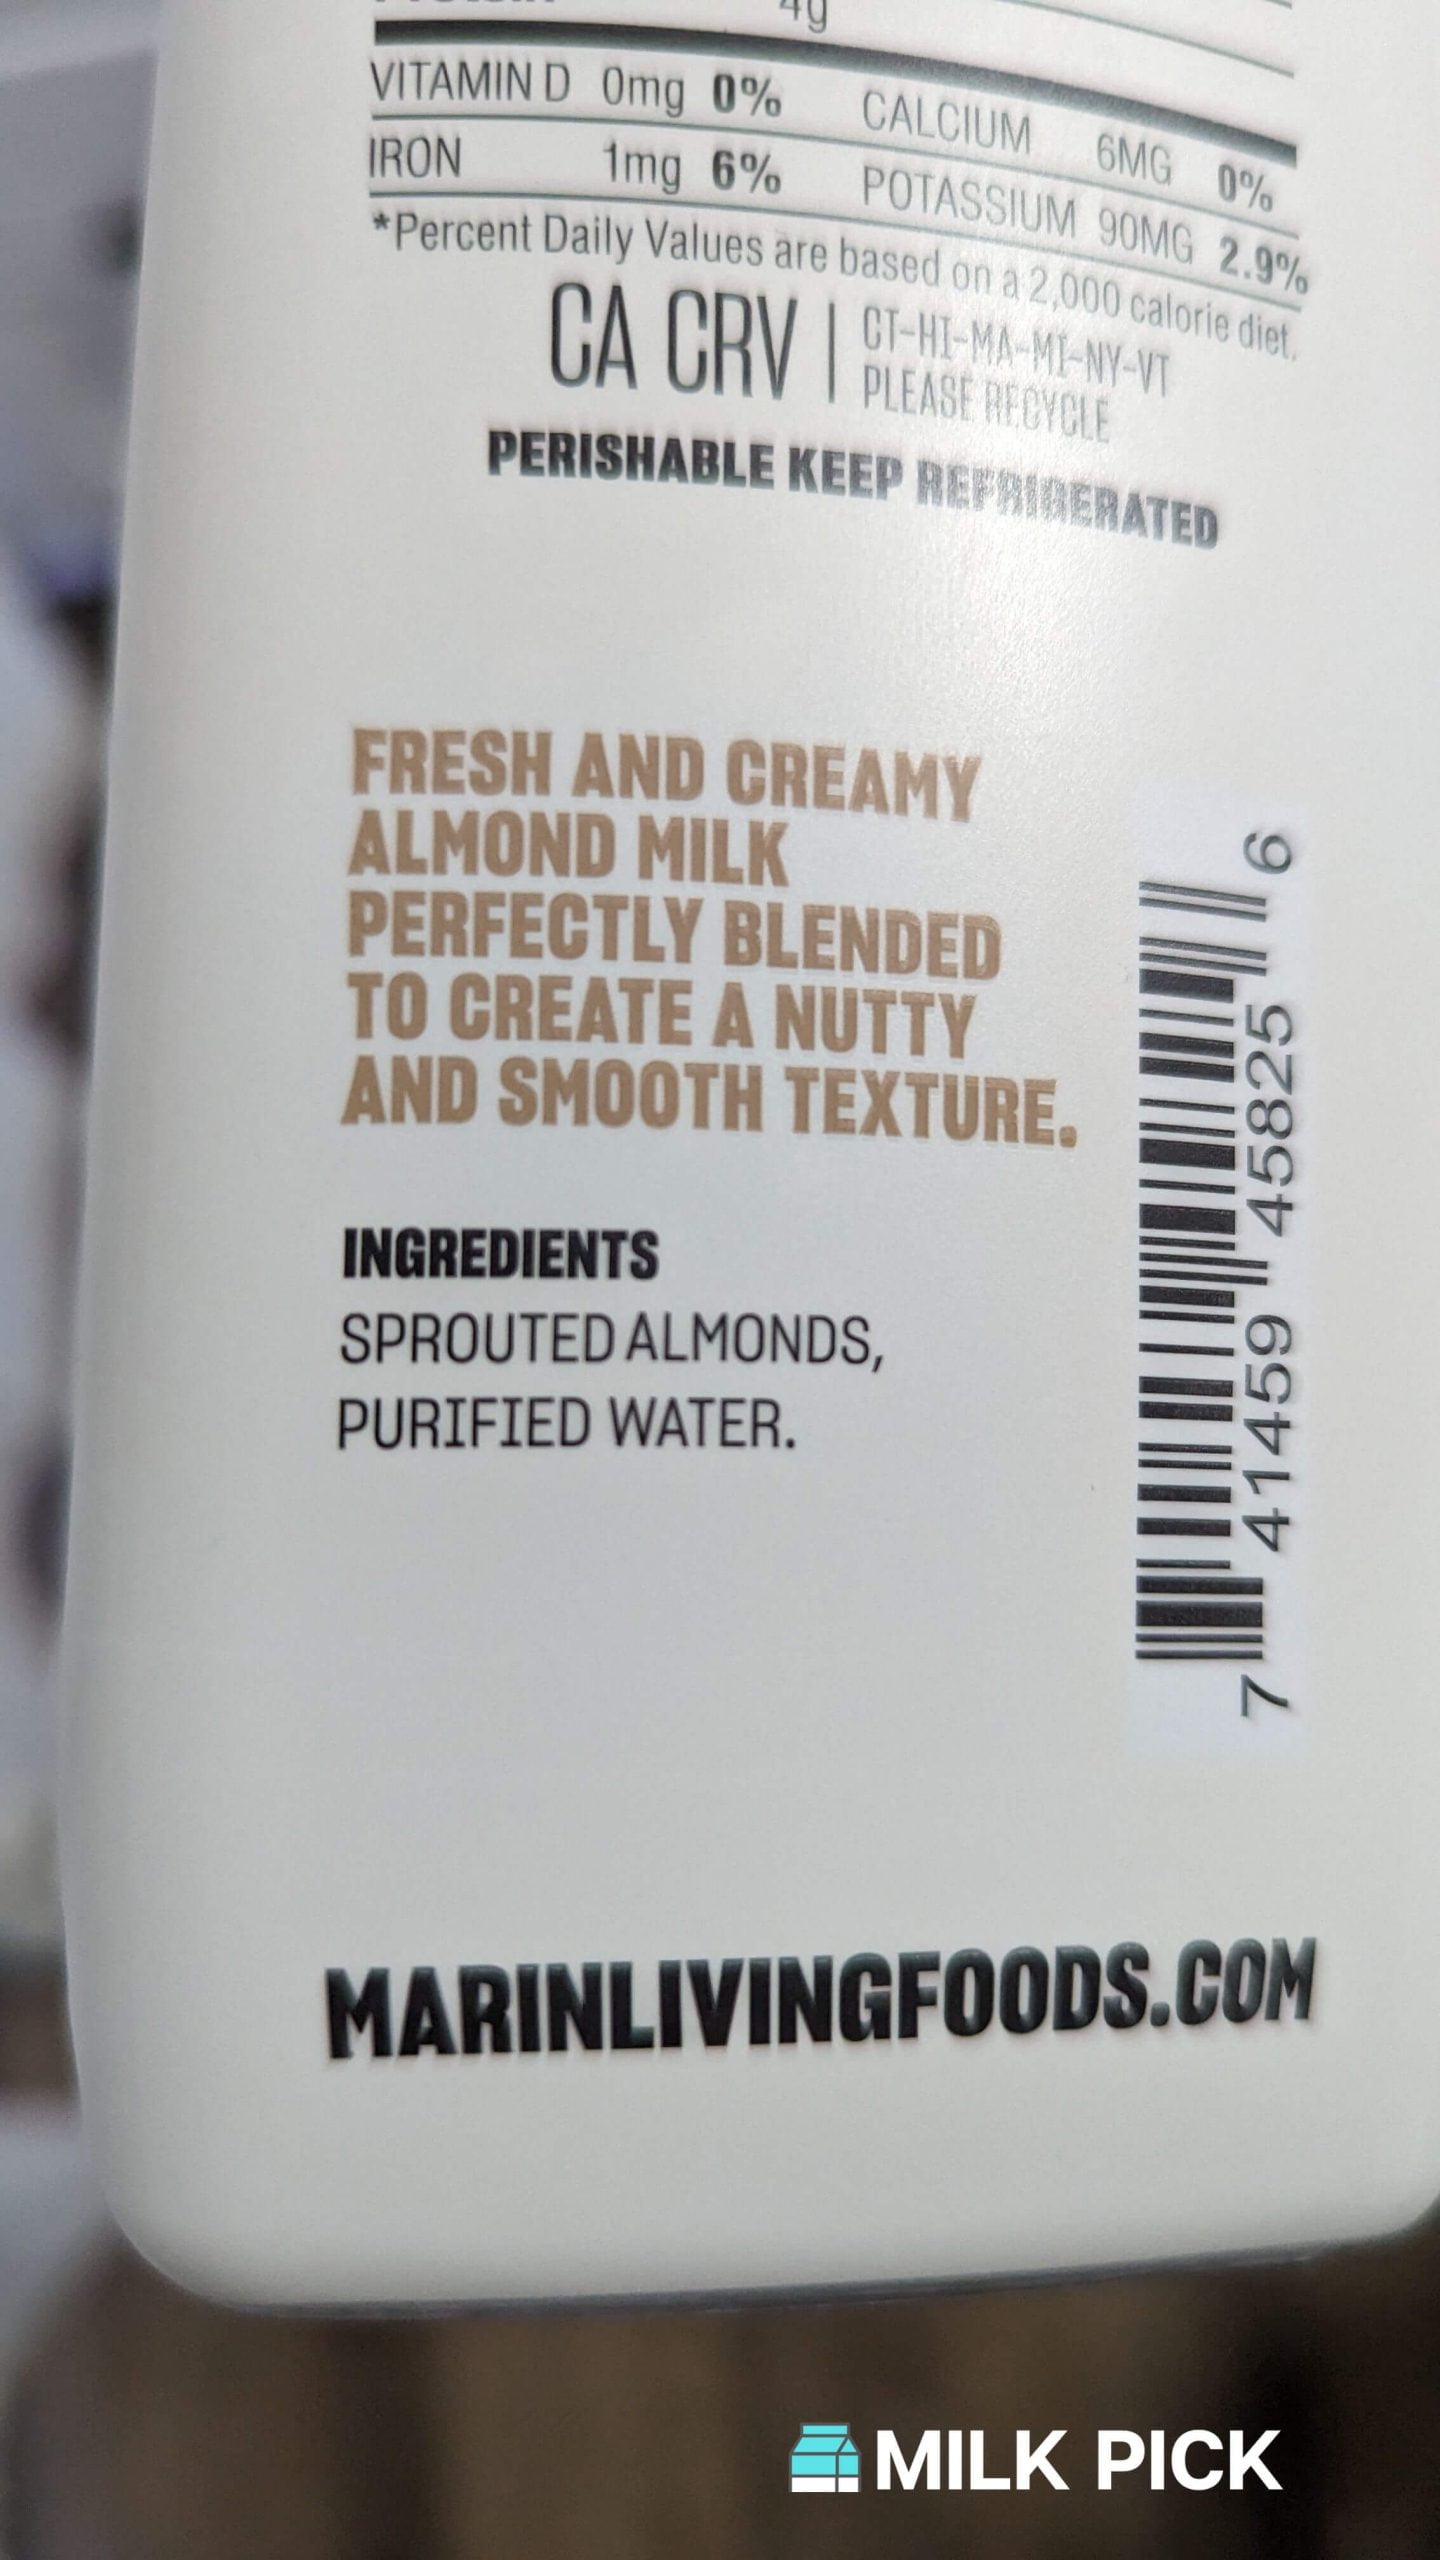 Marin Living Foods Original Almond Milk Ingredients